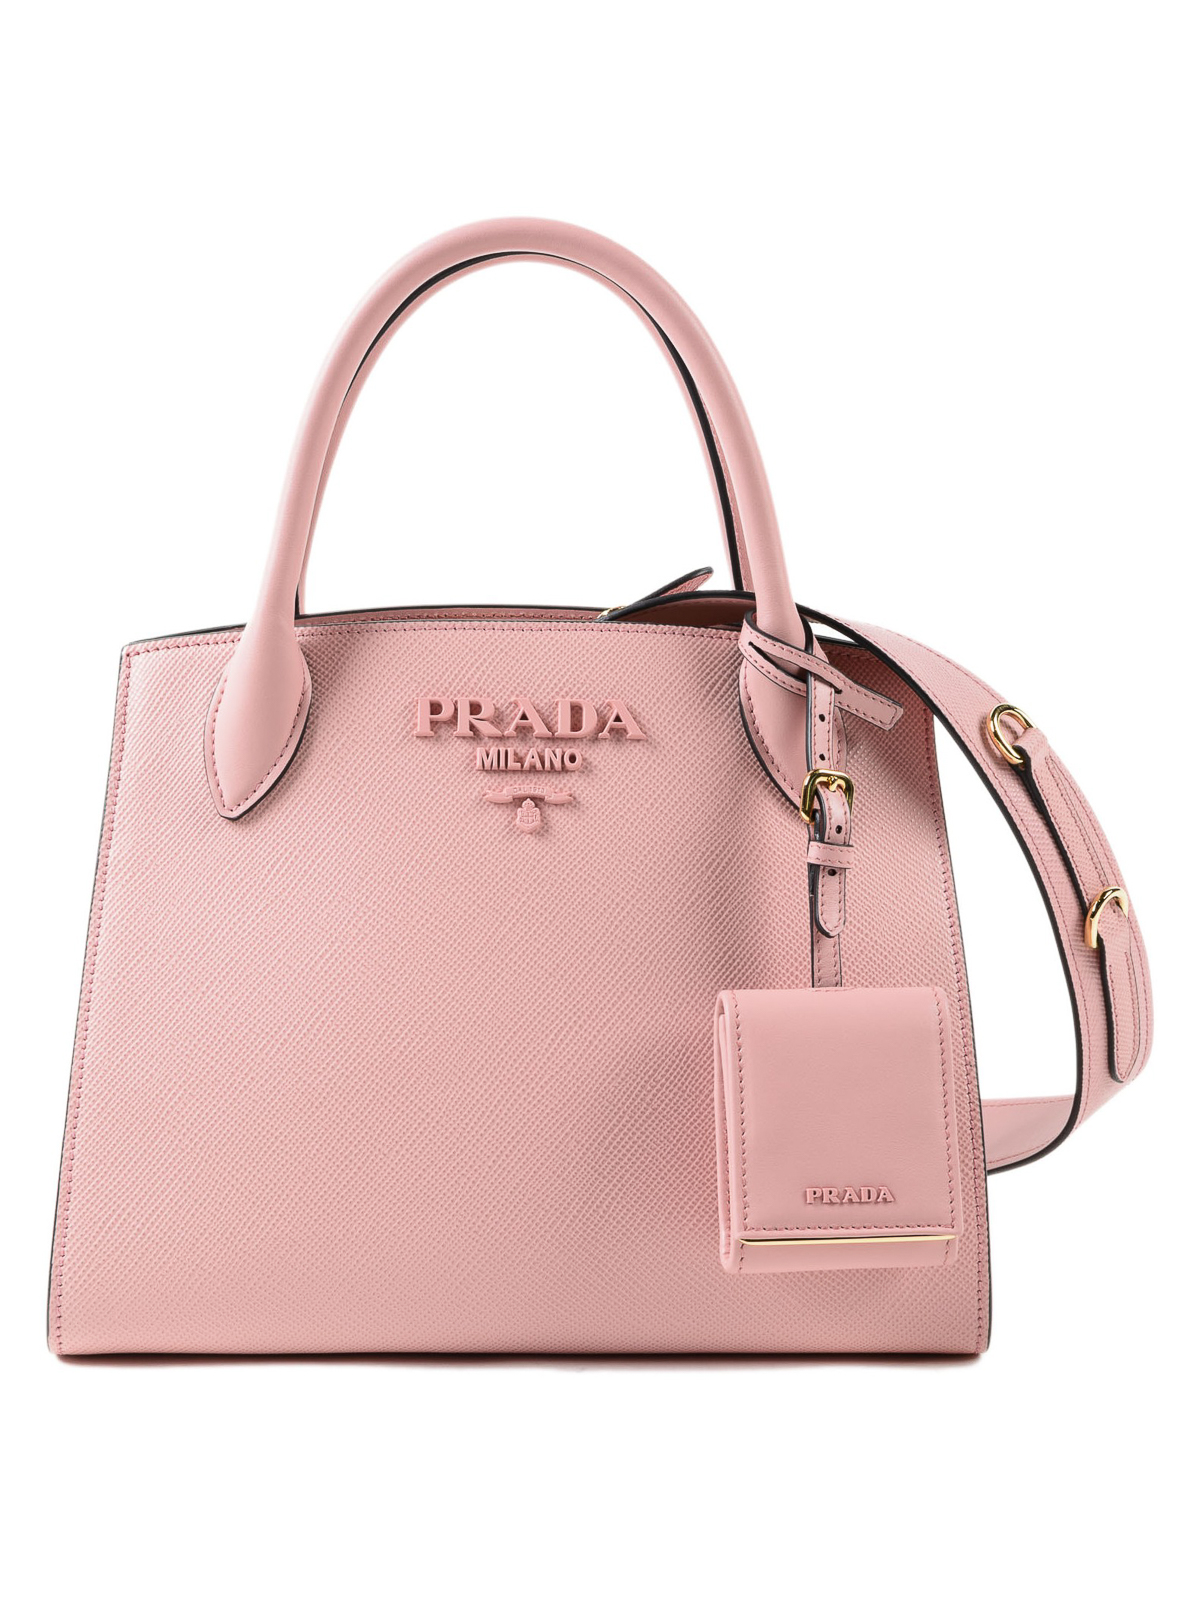 Prada Saffiano Leather Monochrome Bag - Pink